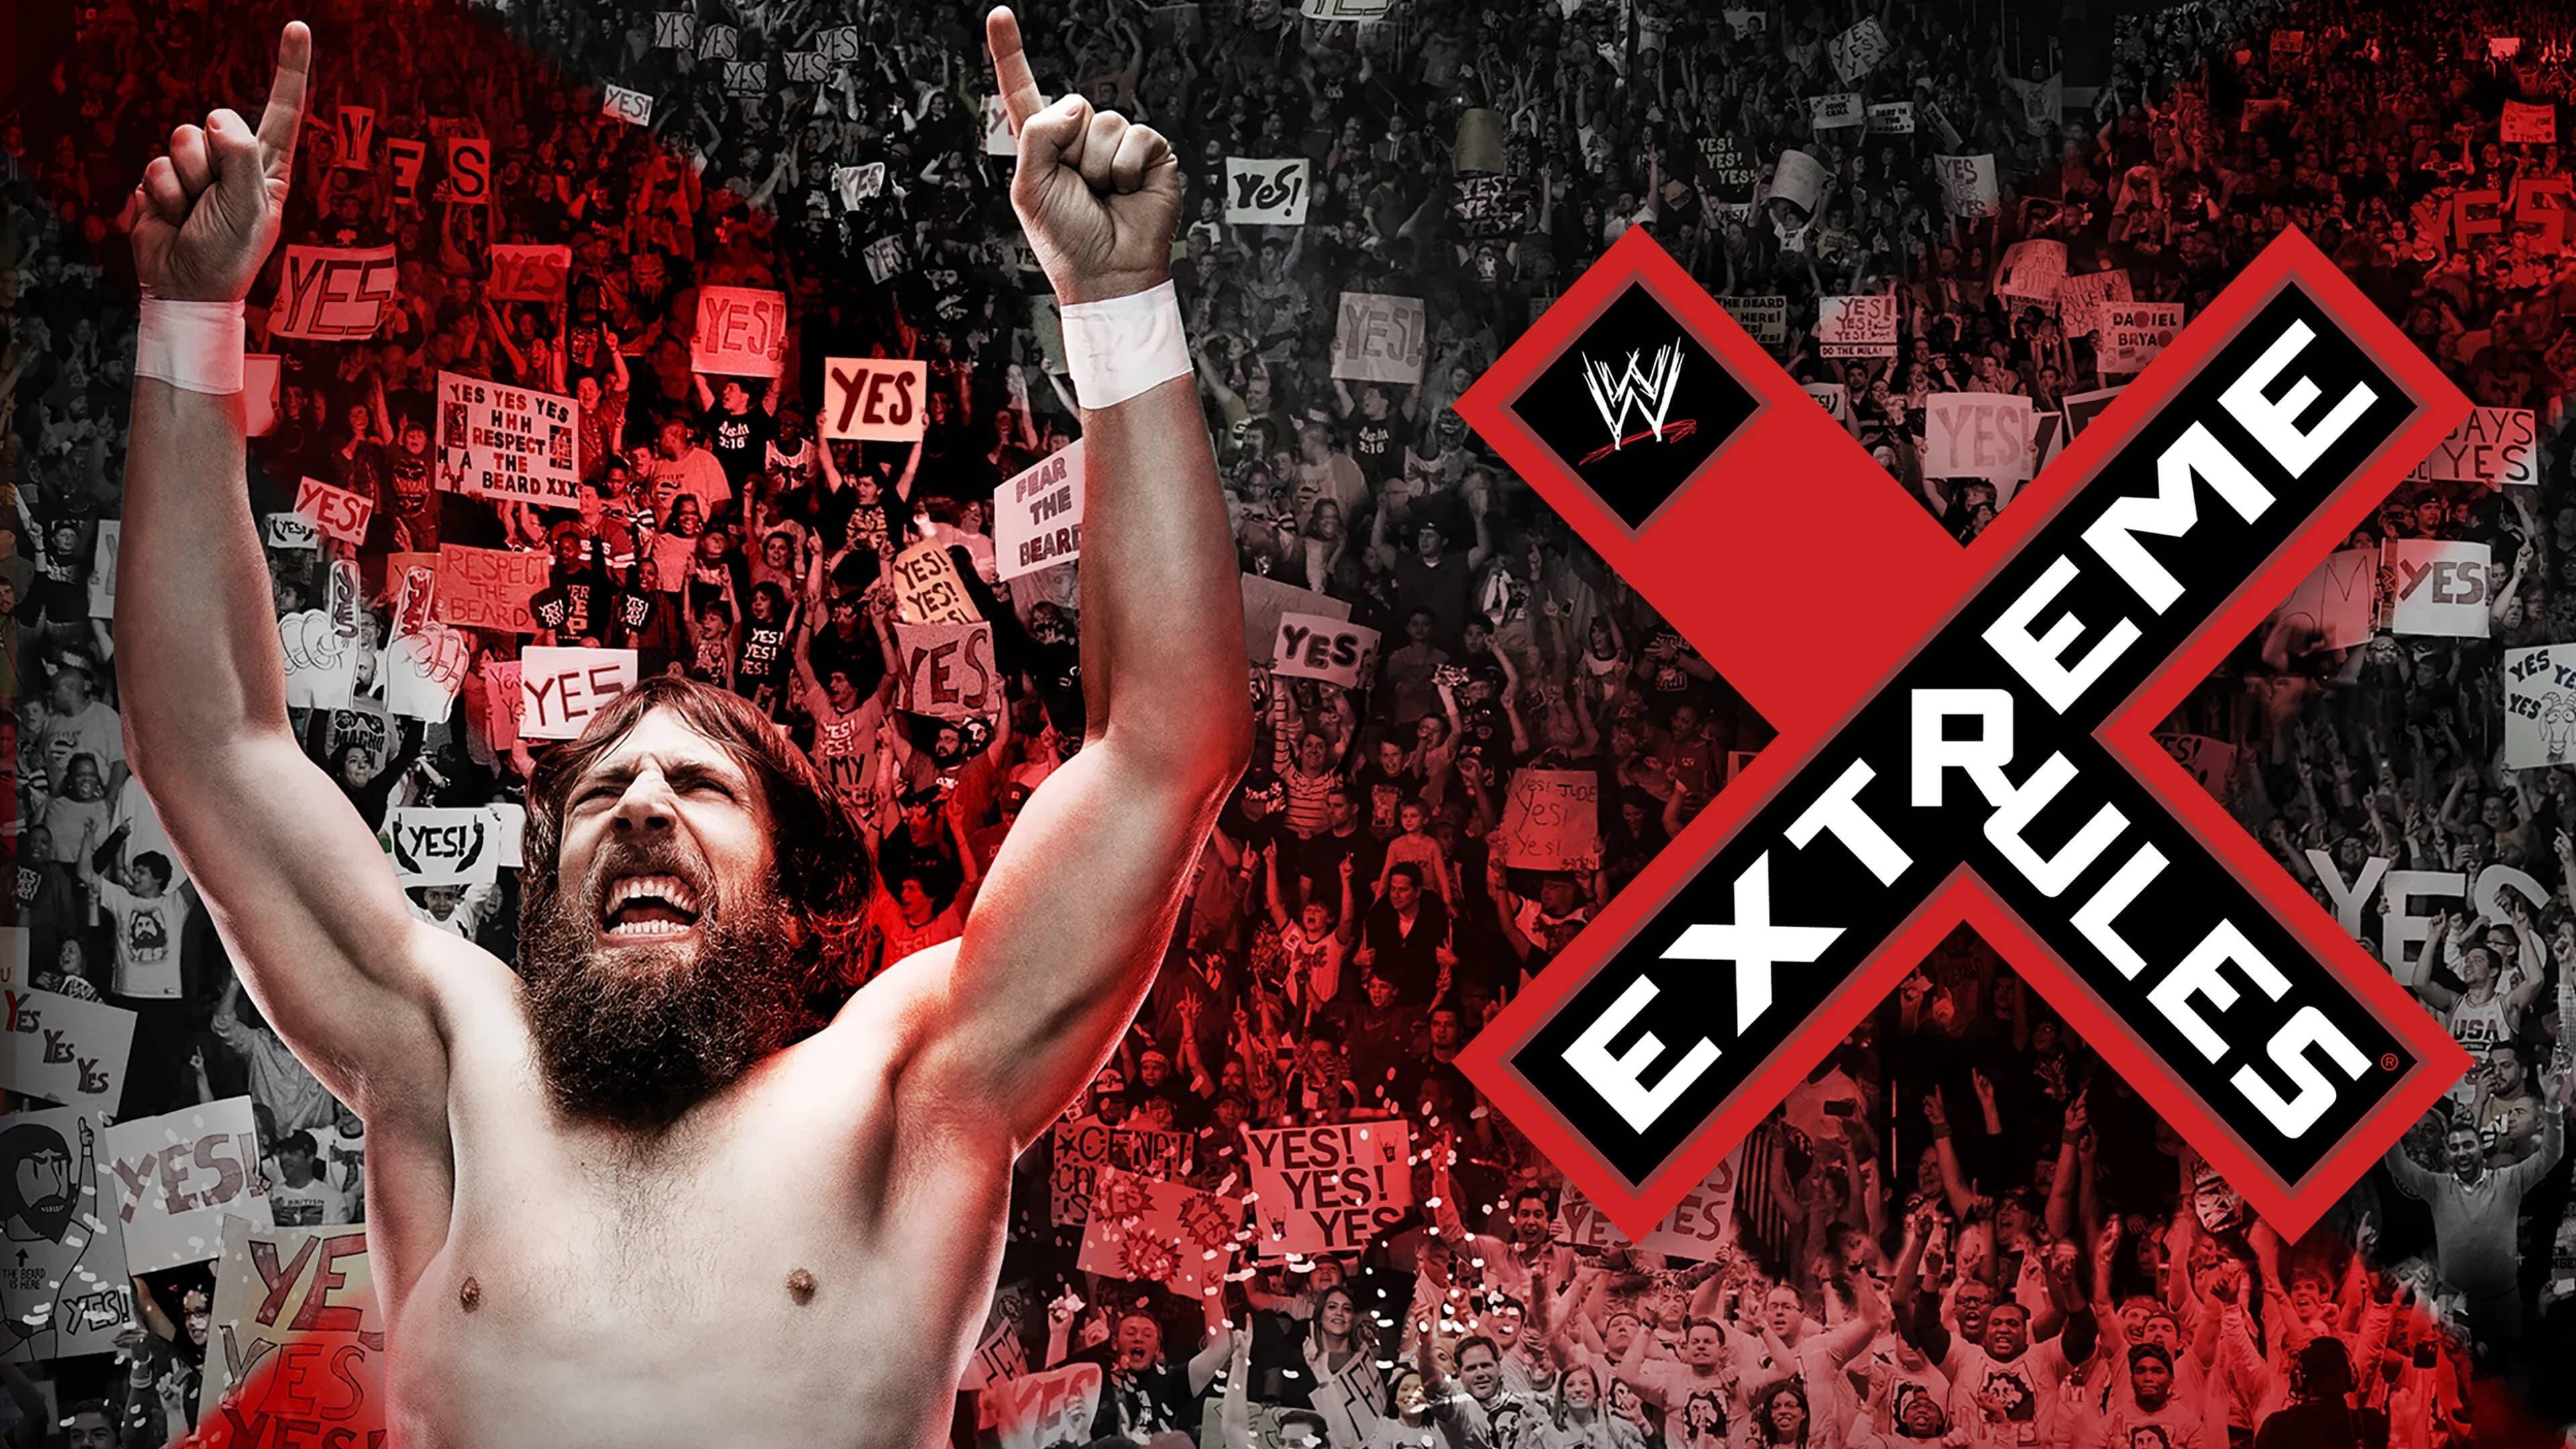 WWE Extreme Rules 2014 backdrop